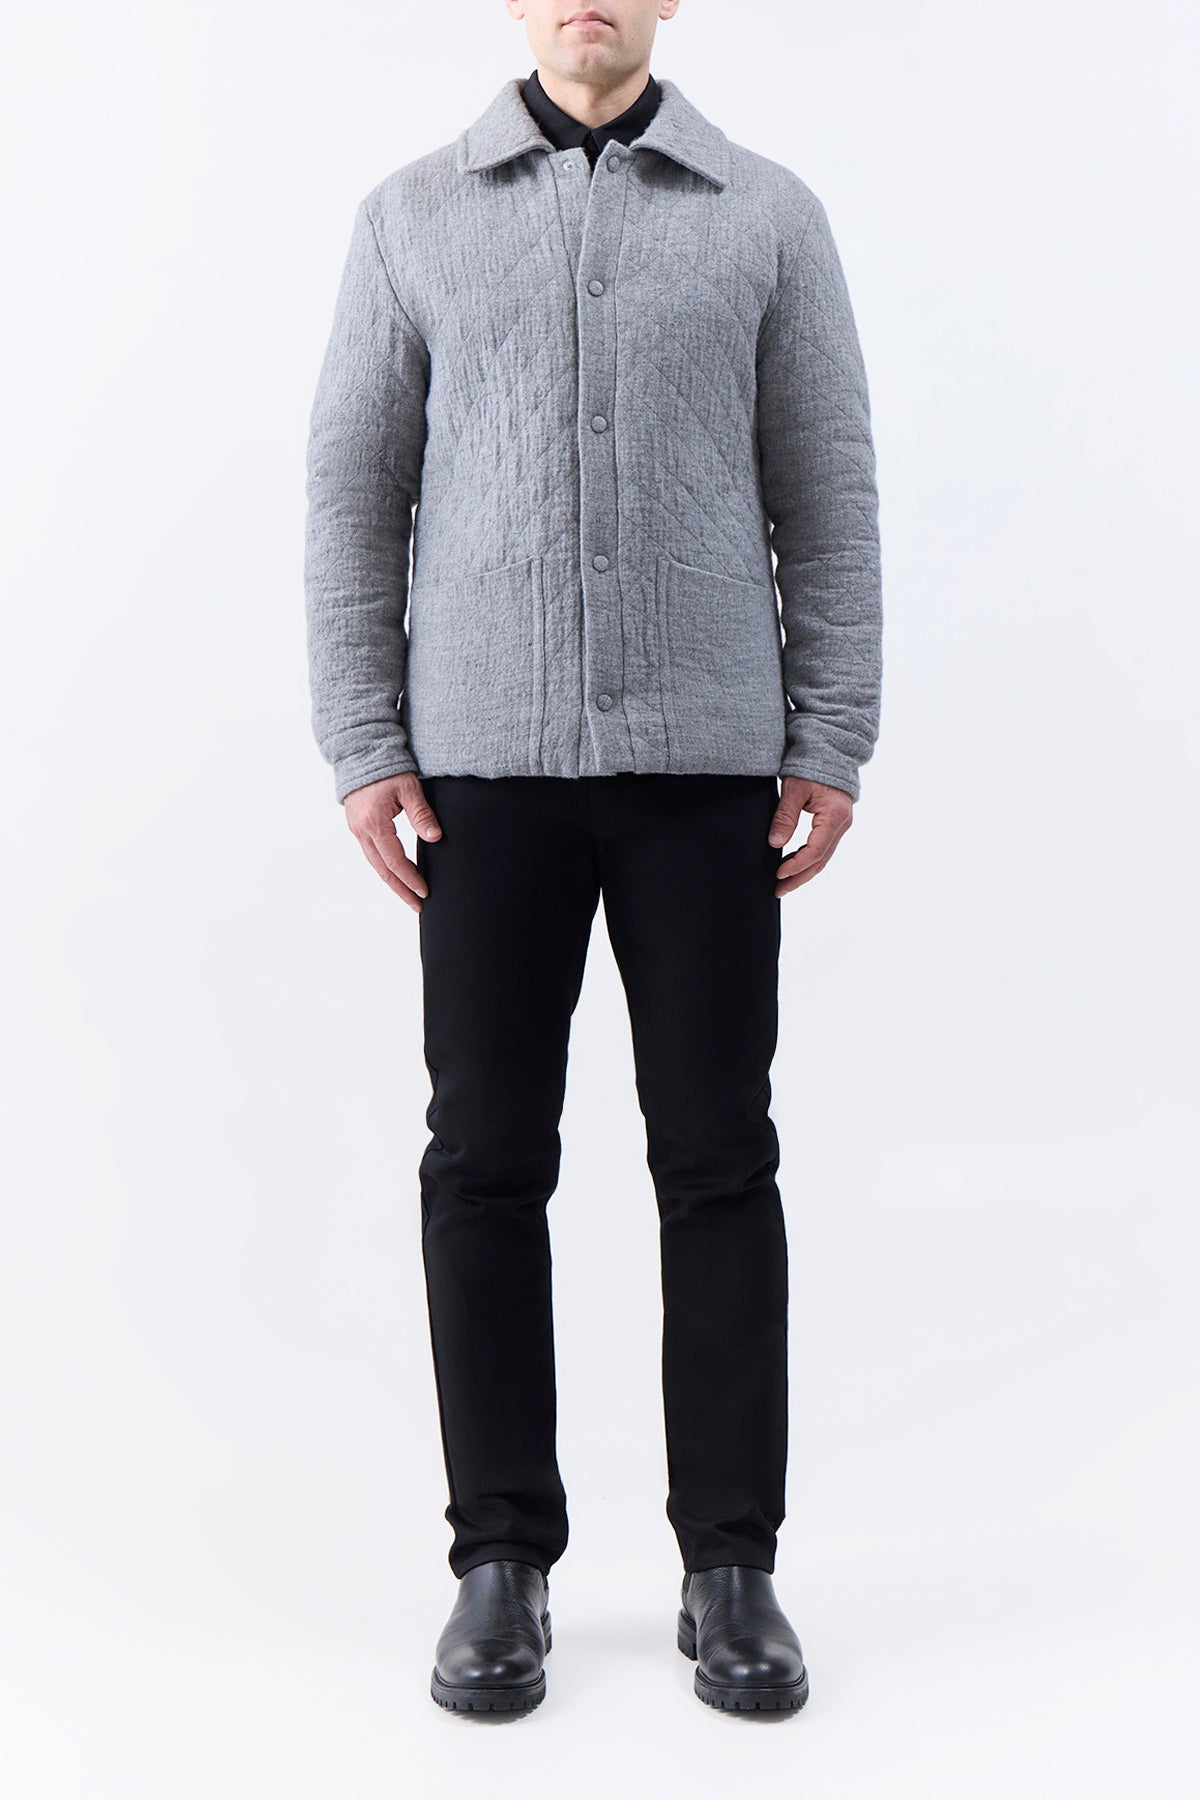 Skye Paddock Jacket in Light Grey Melange Cashmere Linen